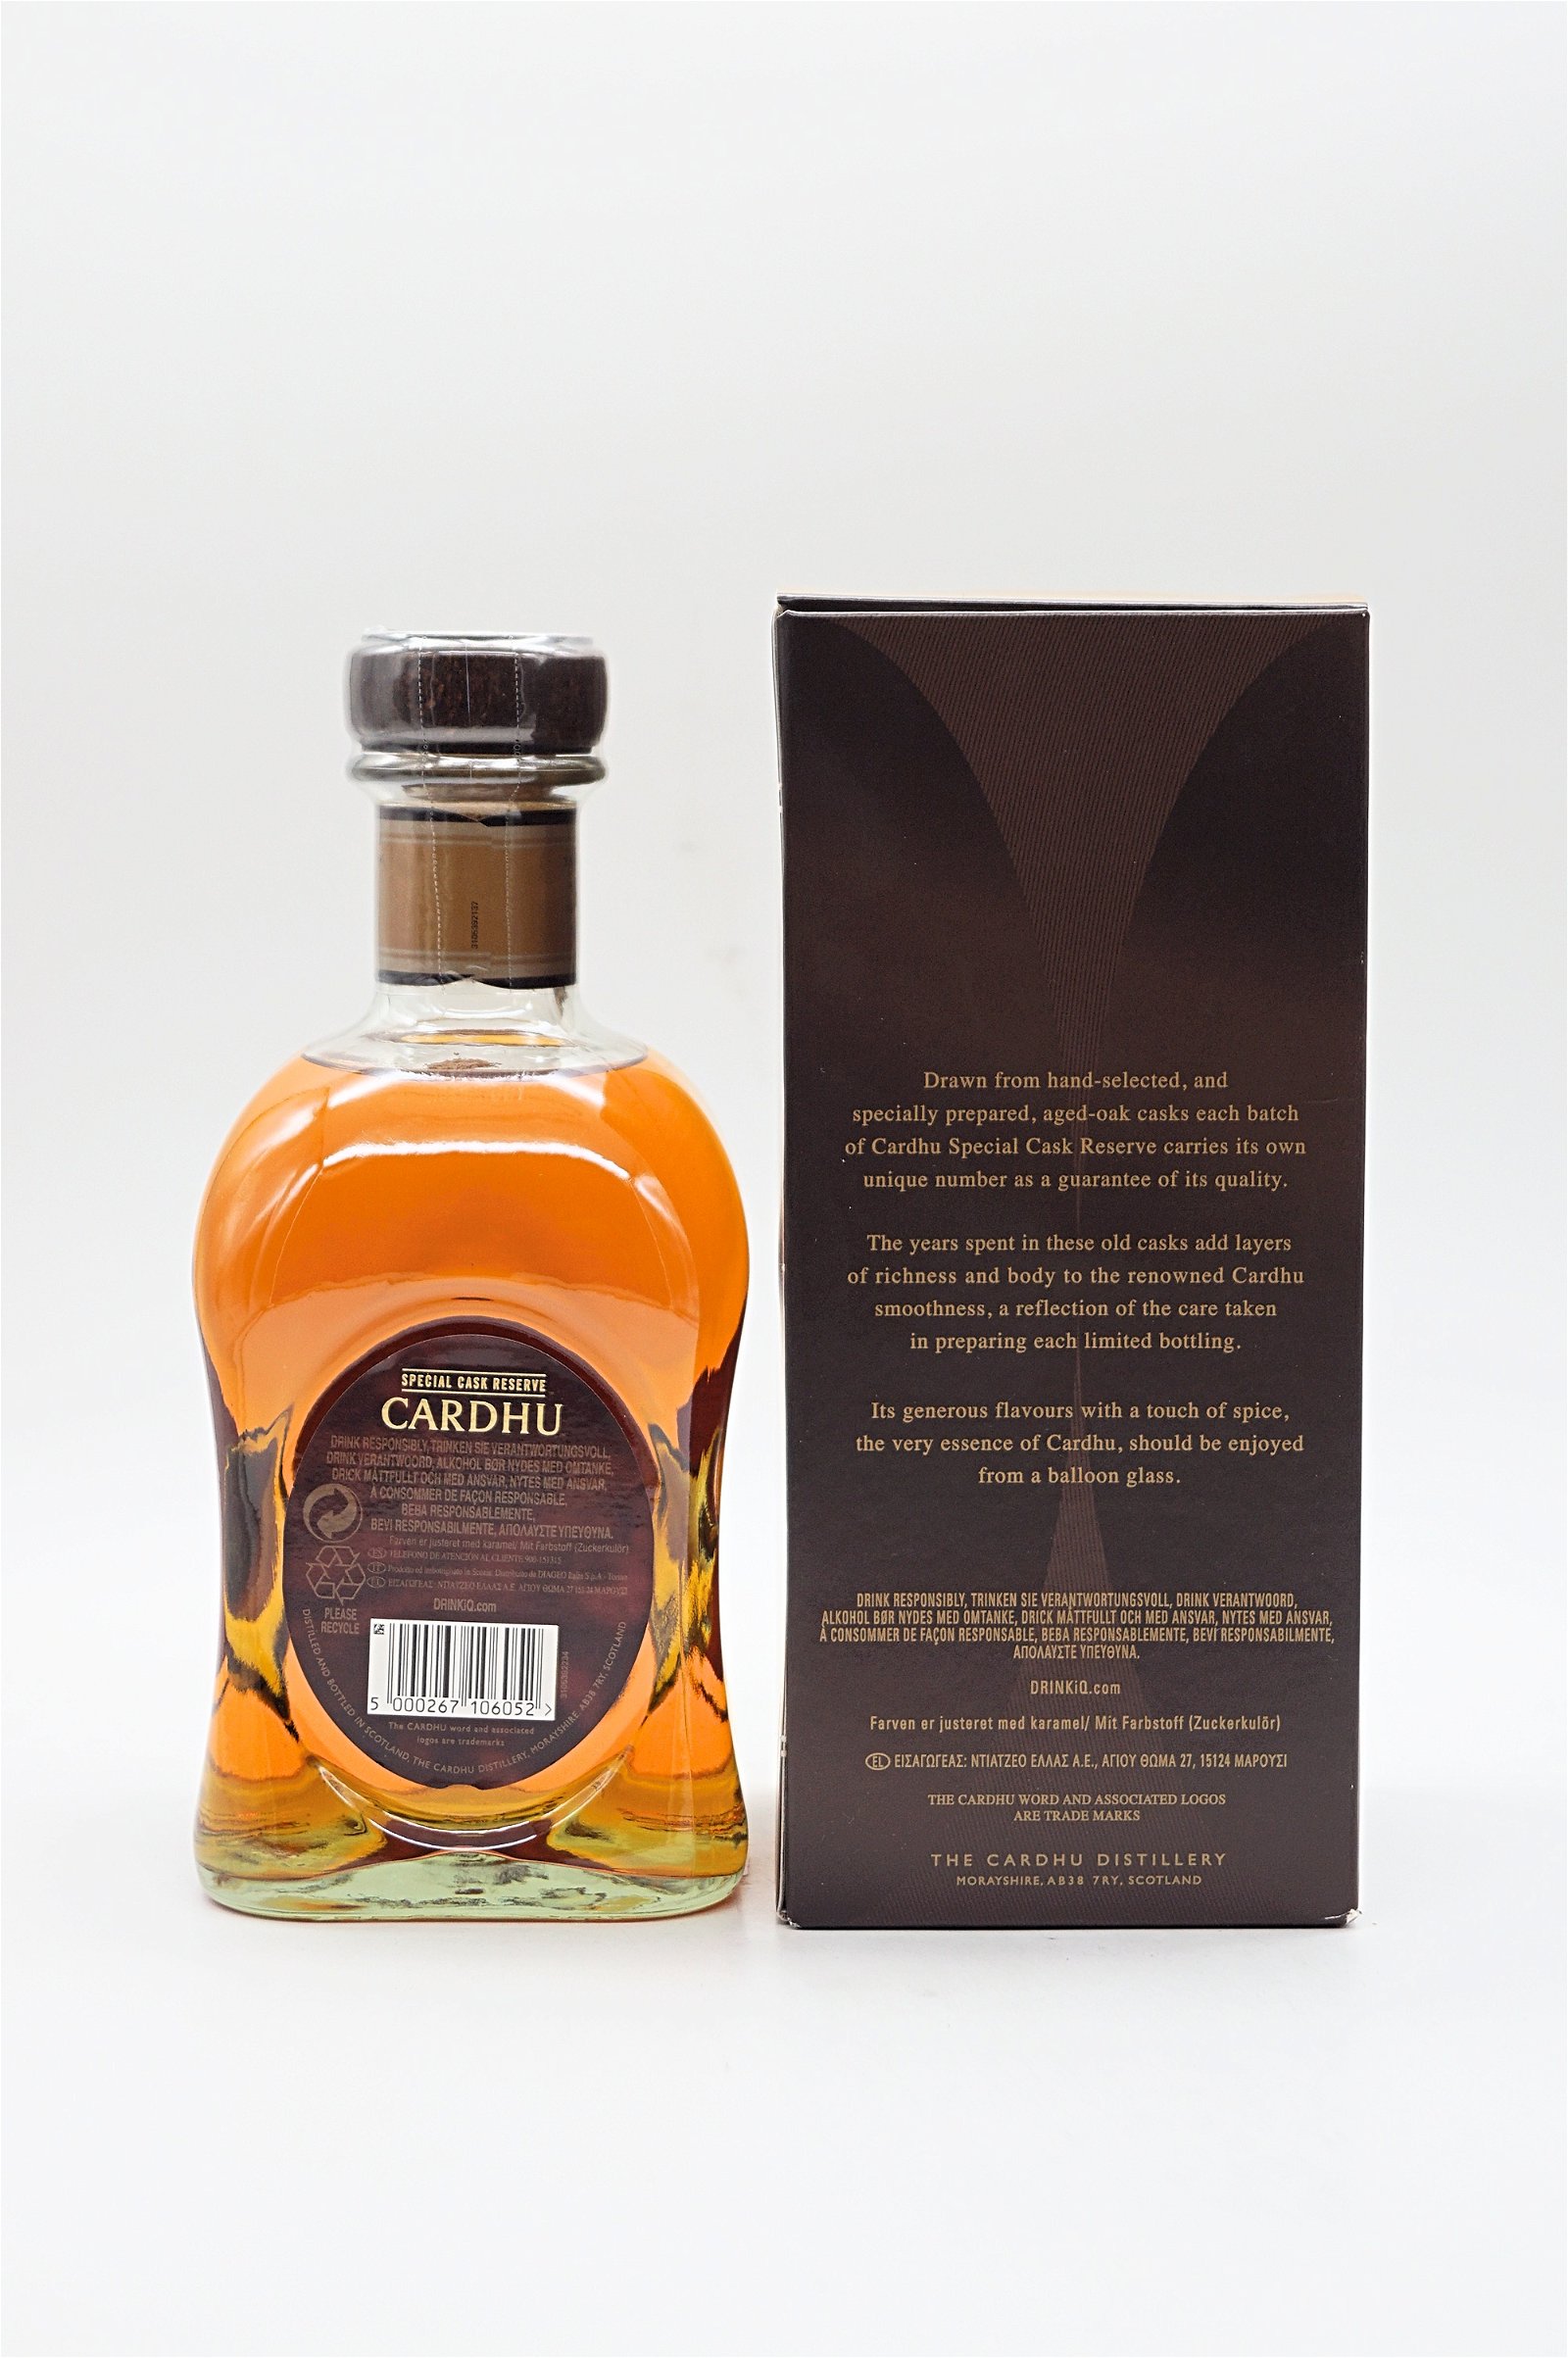 Cardhu Special Cask Reserve Batch Cs/cR.13.15 Single Malt Scotch Whisky